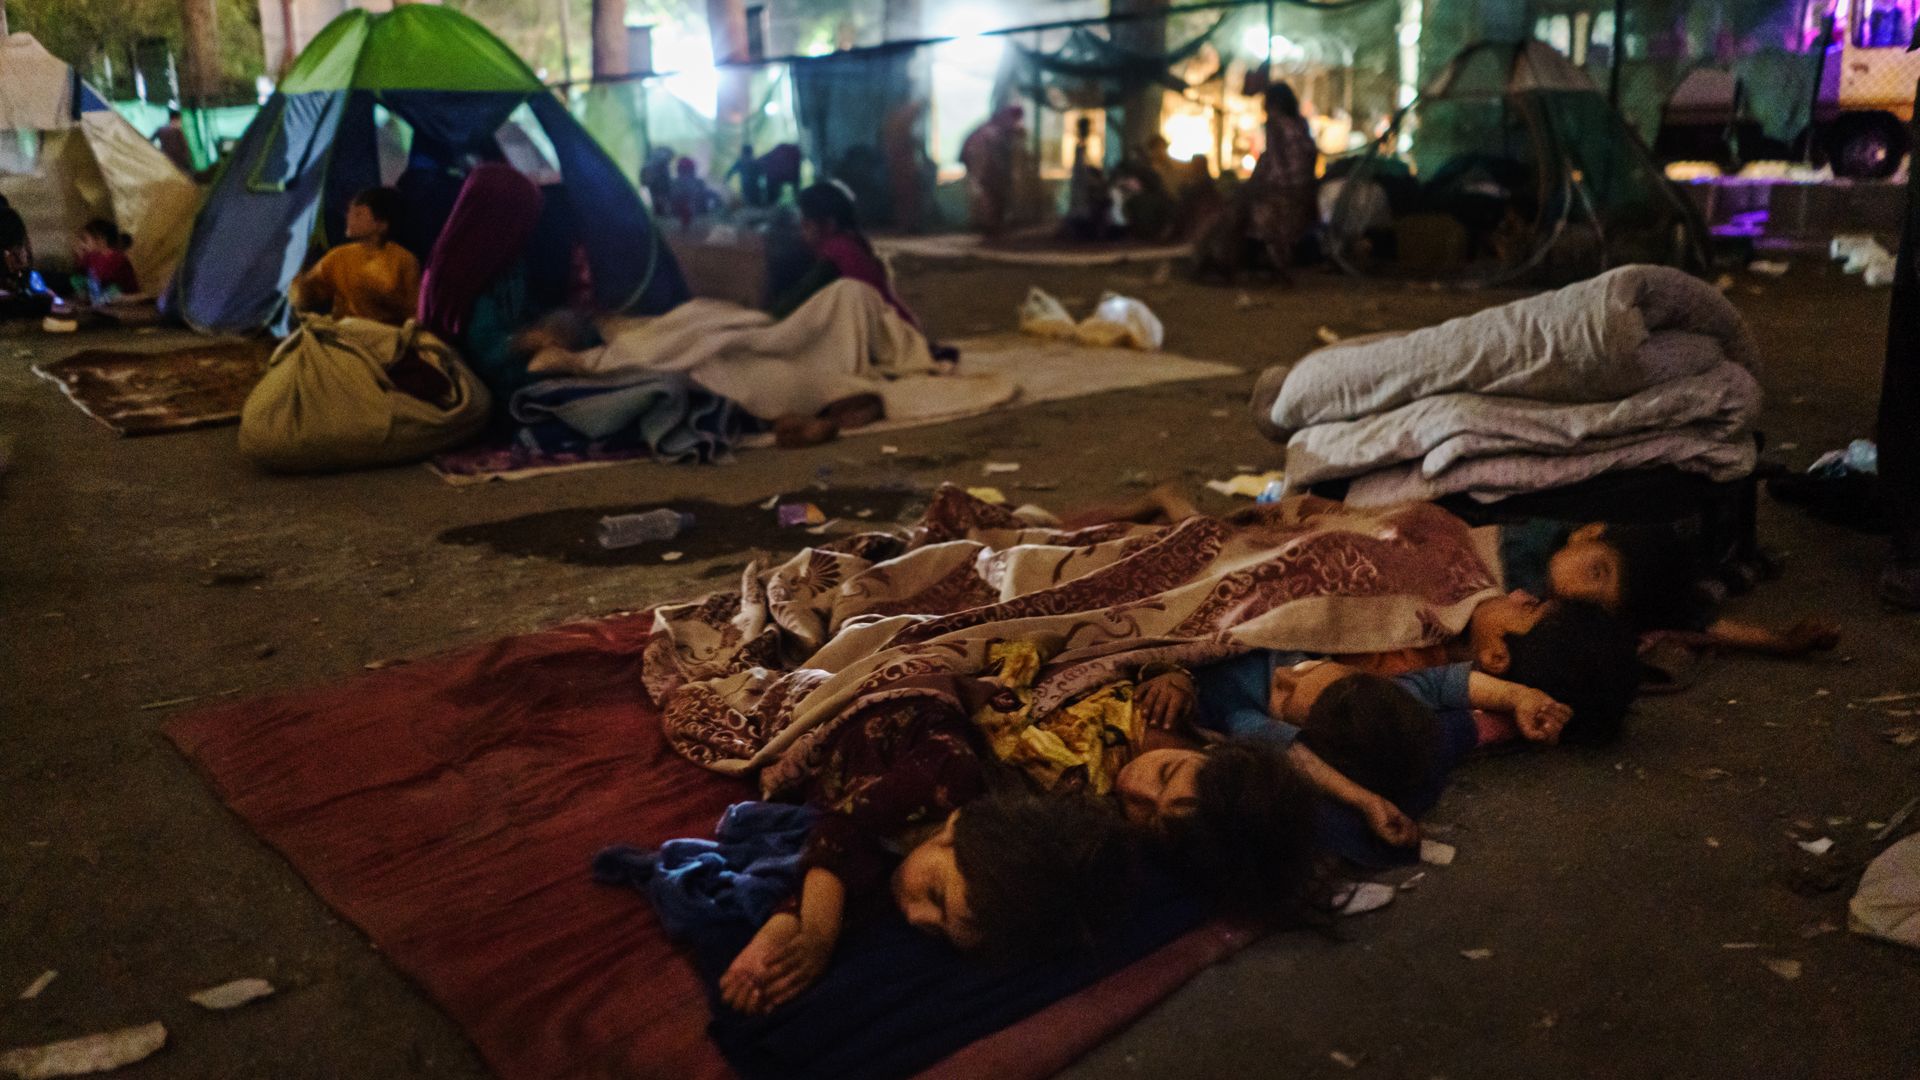 Children sleeping on a mat in the street